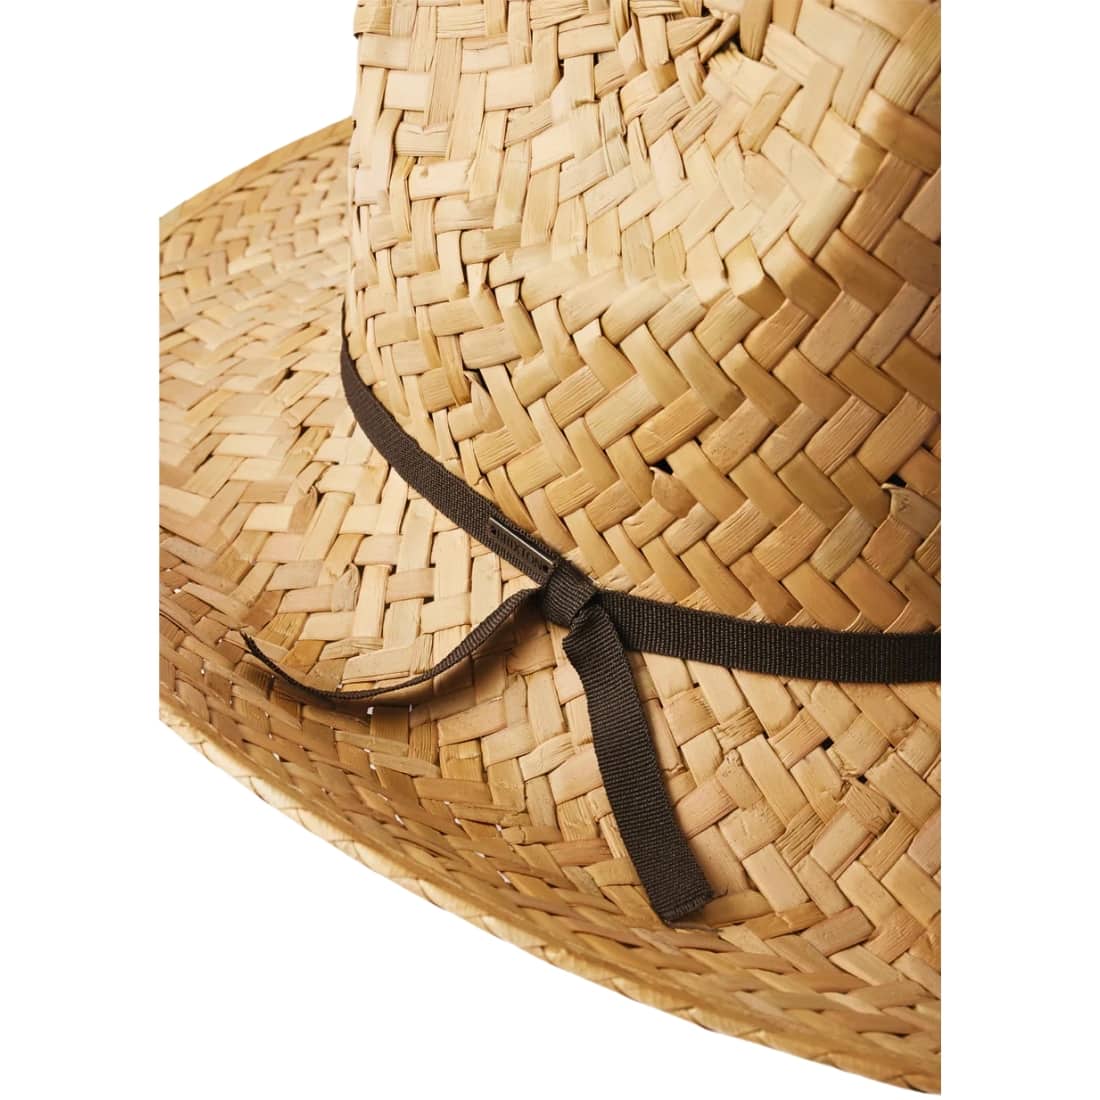 Brixton Houston Straw Cowboy Hat - Natural - Fedora/Trilby Hat by Brixton